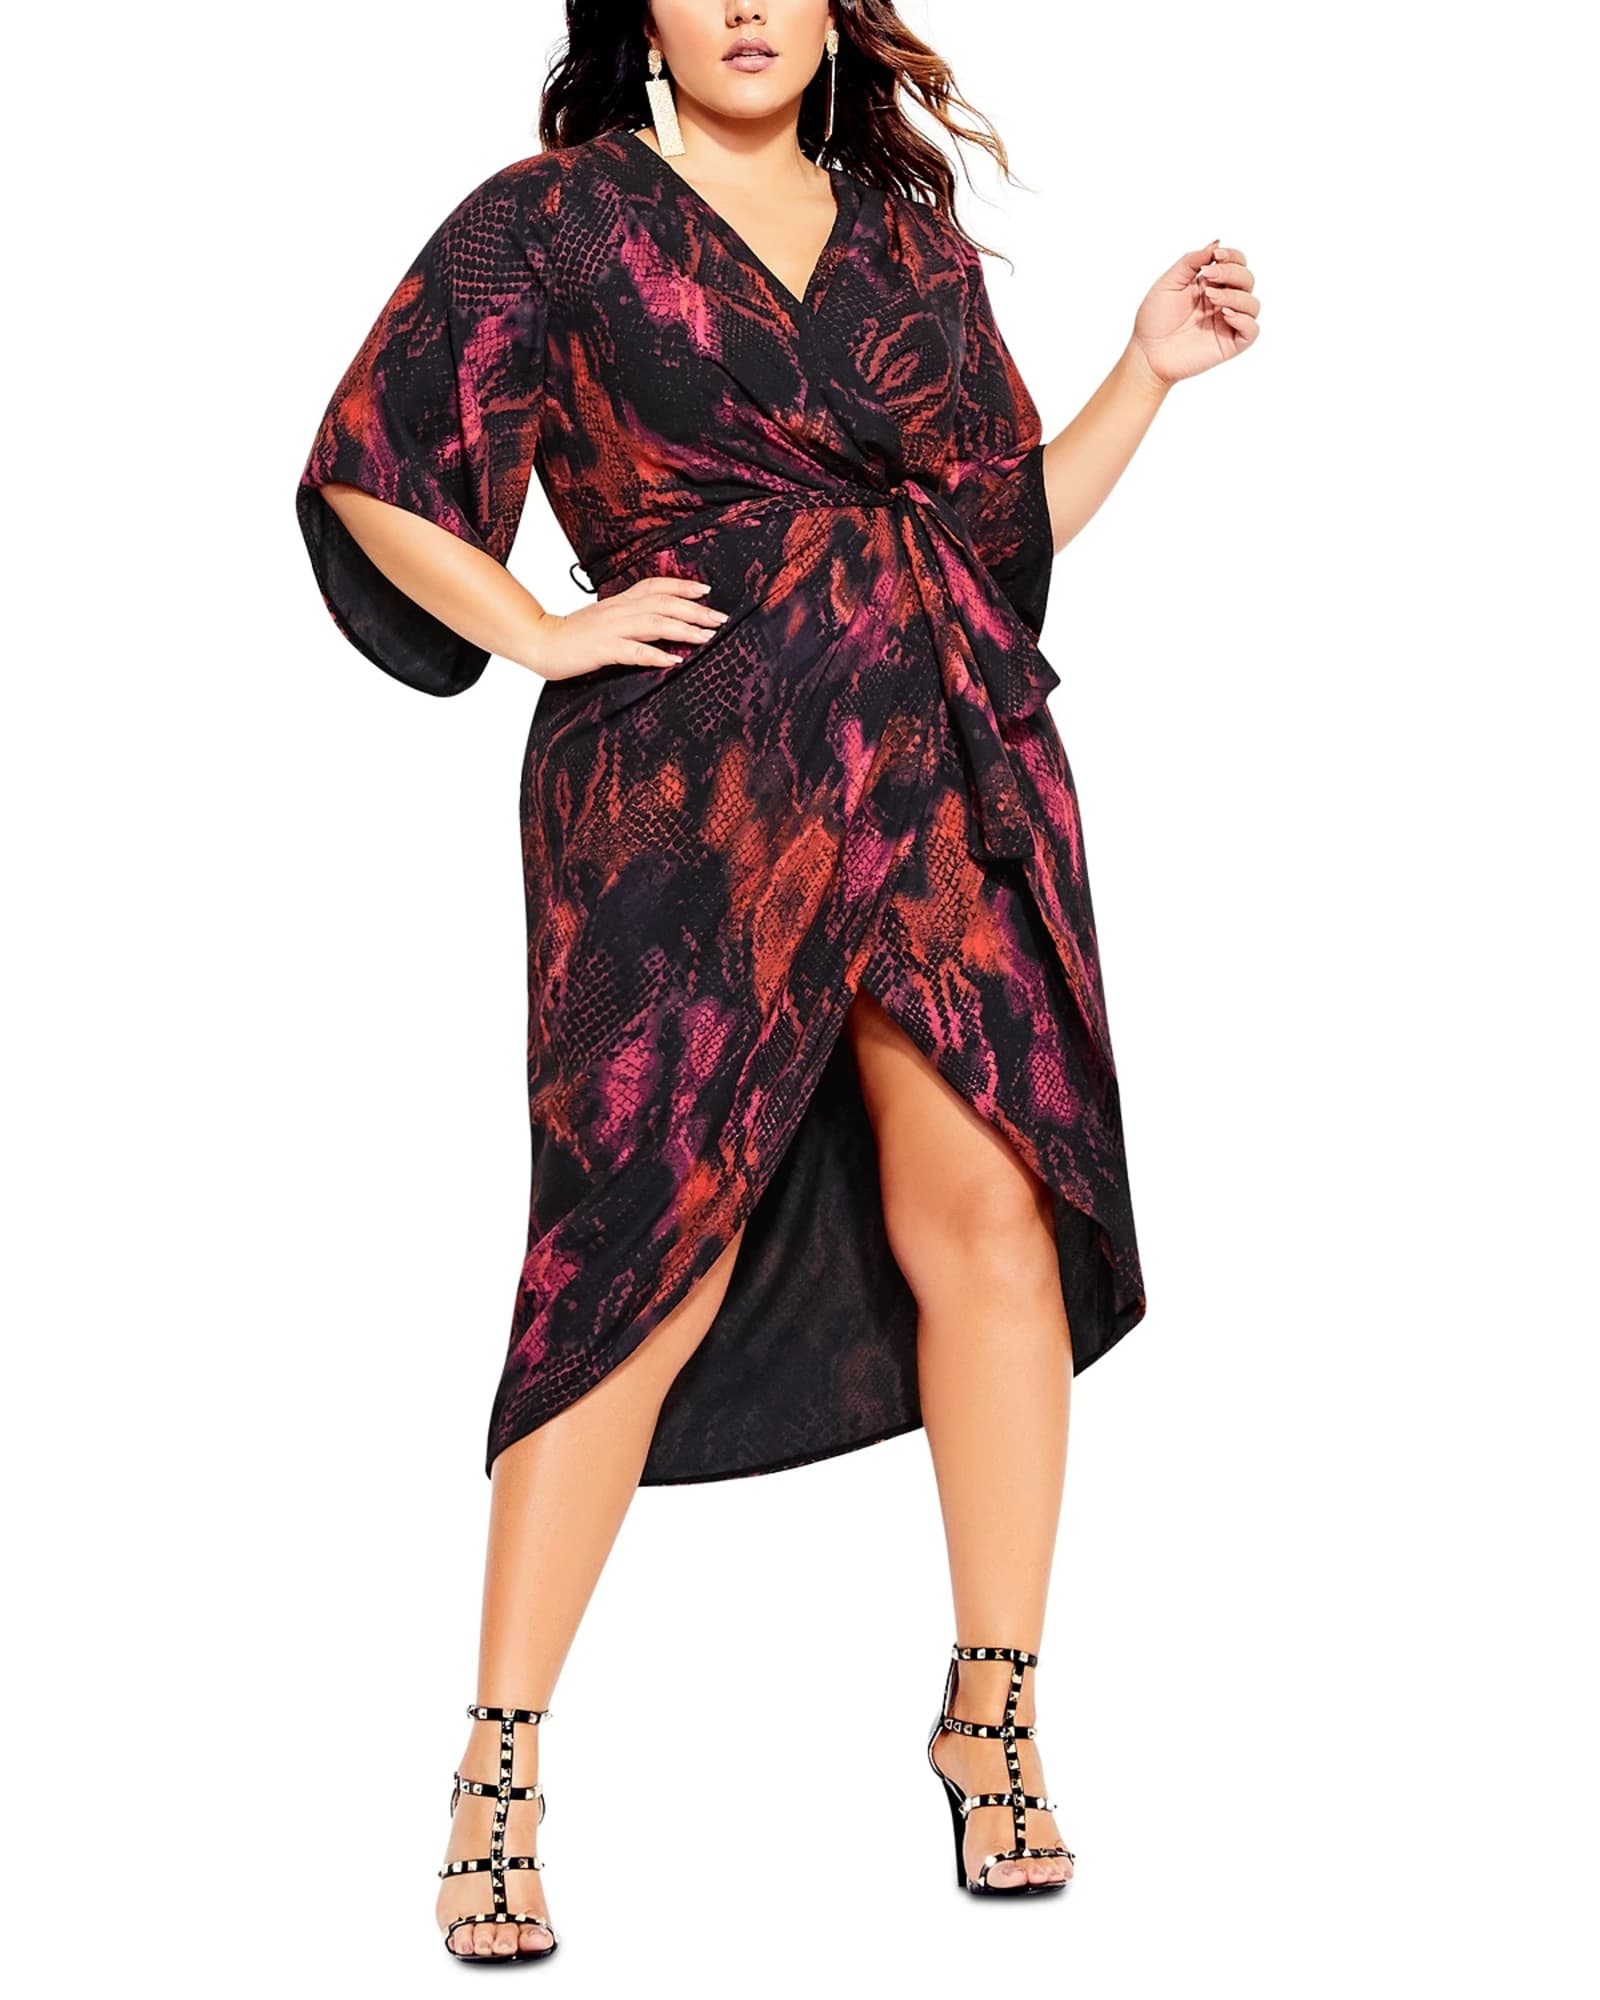 Ruby Rd. Womens Plus-Size Floral Print Dress Rose Multi Size 3X